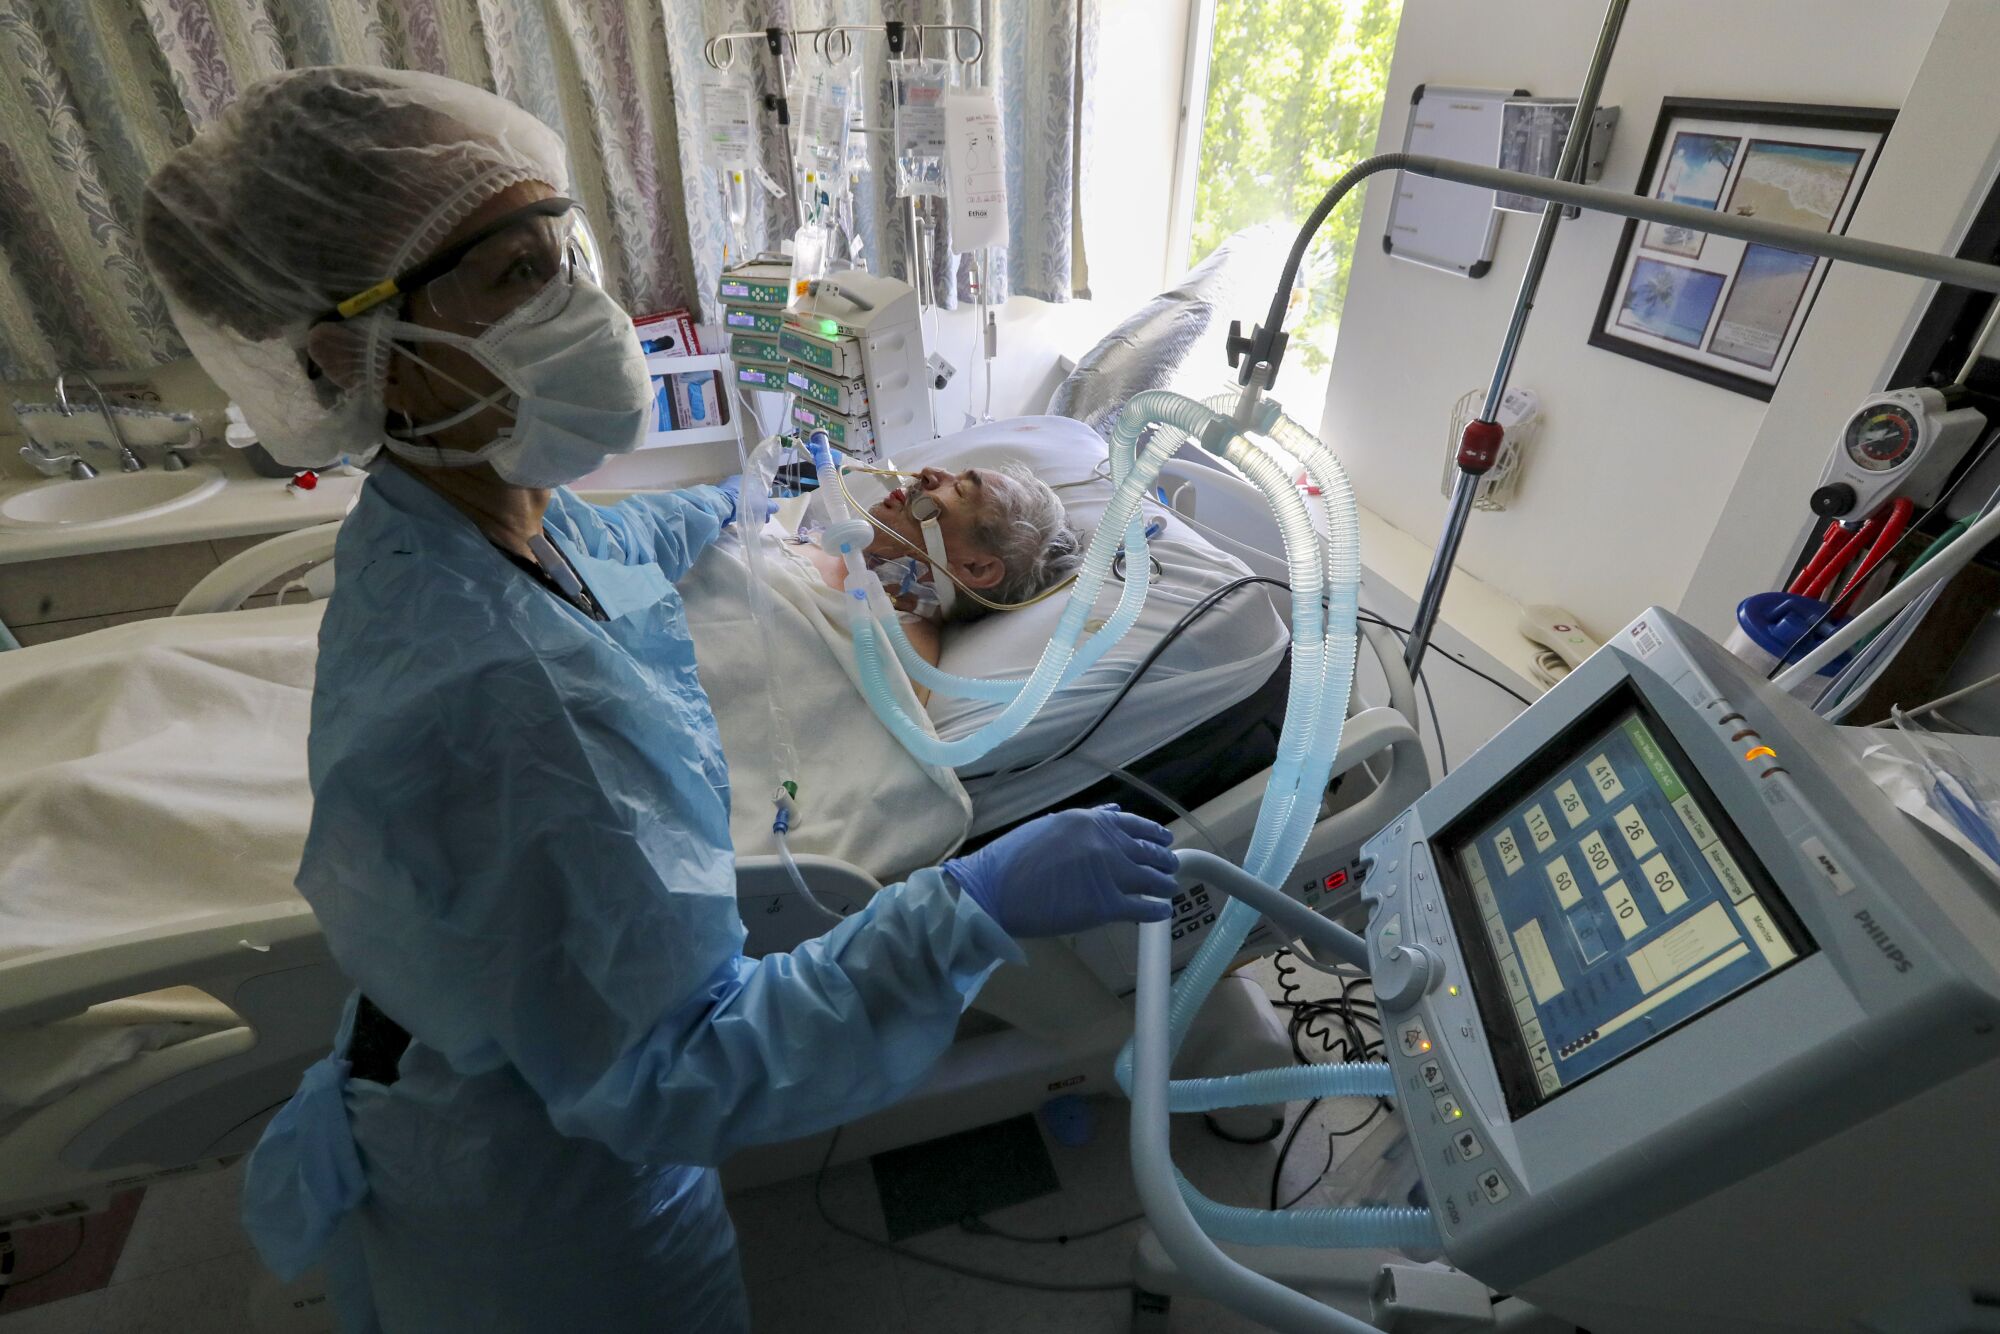 A nurse checks a monitor next to a patient who has an oxygen tube.